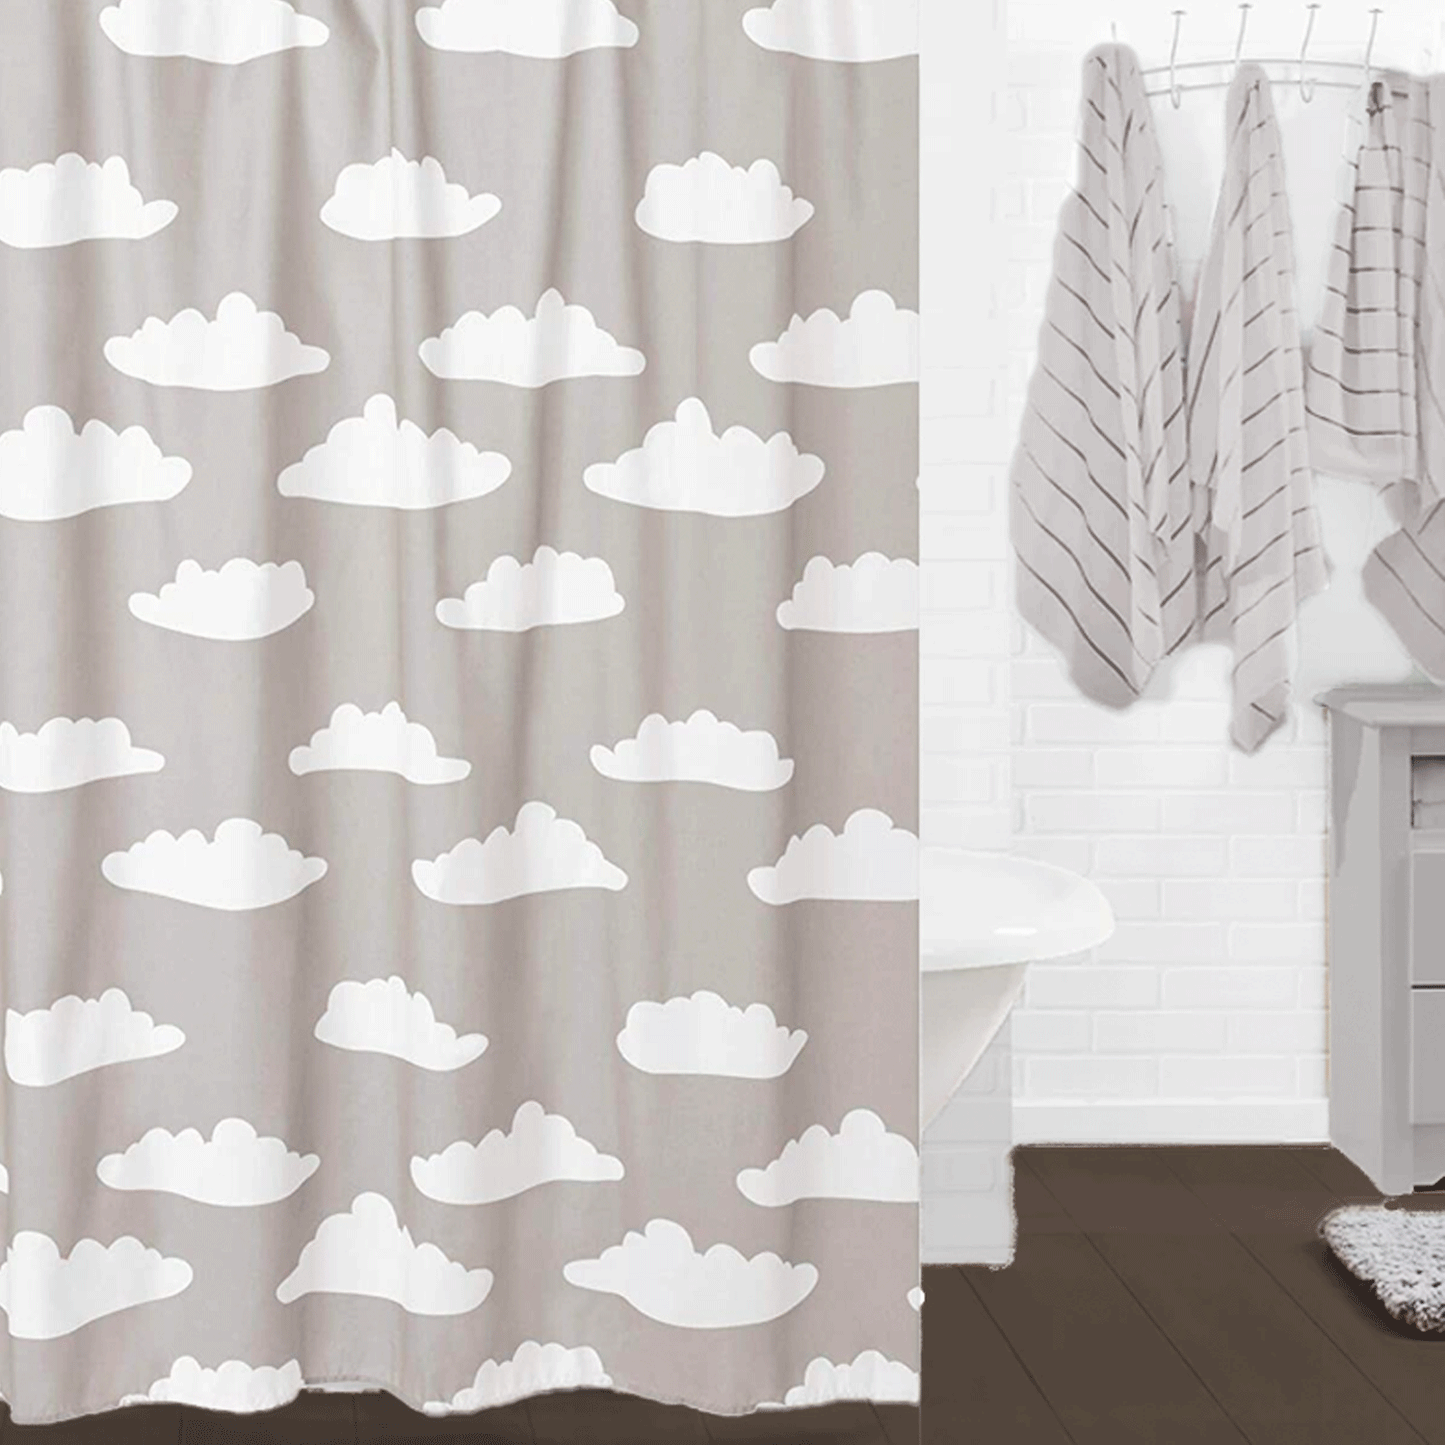 Cloud Fabric Shower Curtain